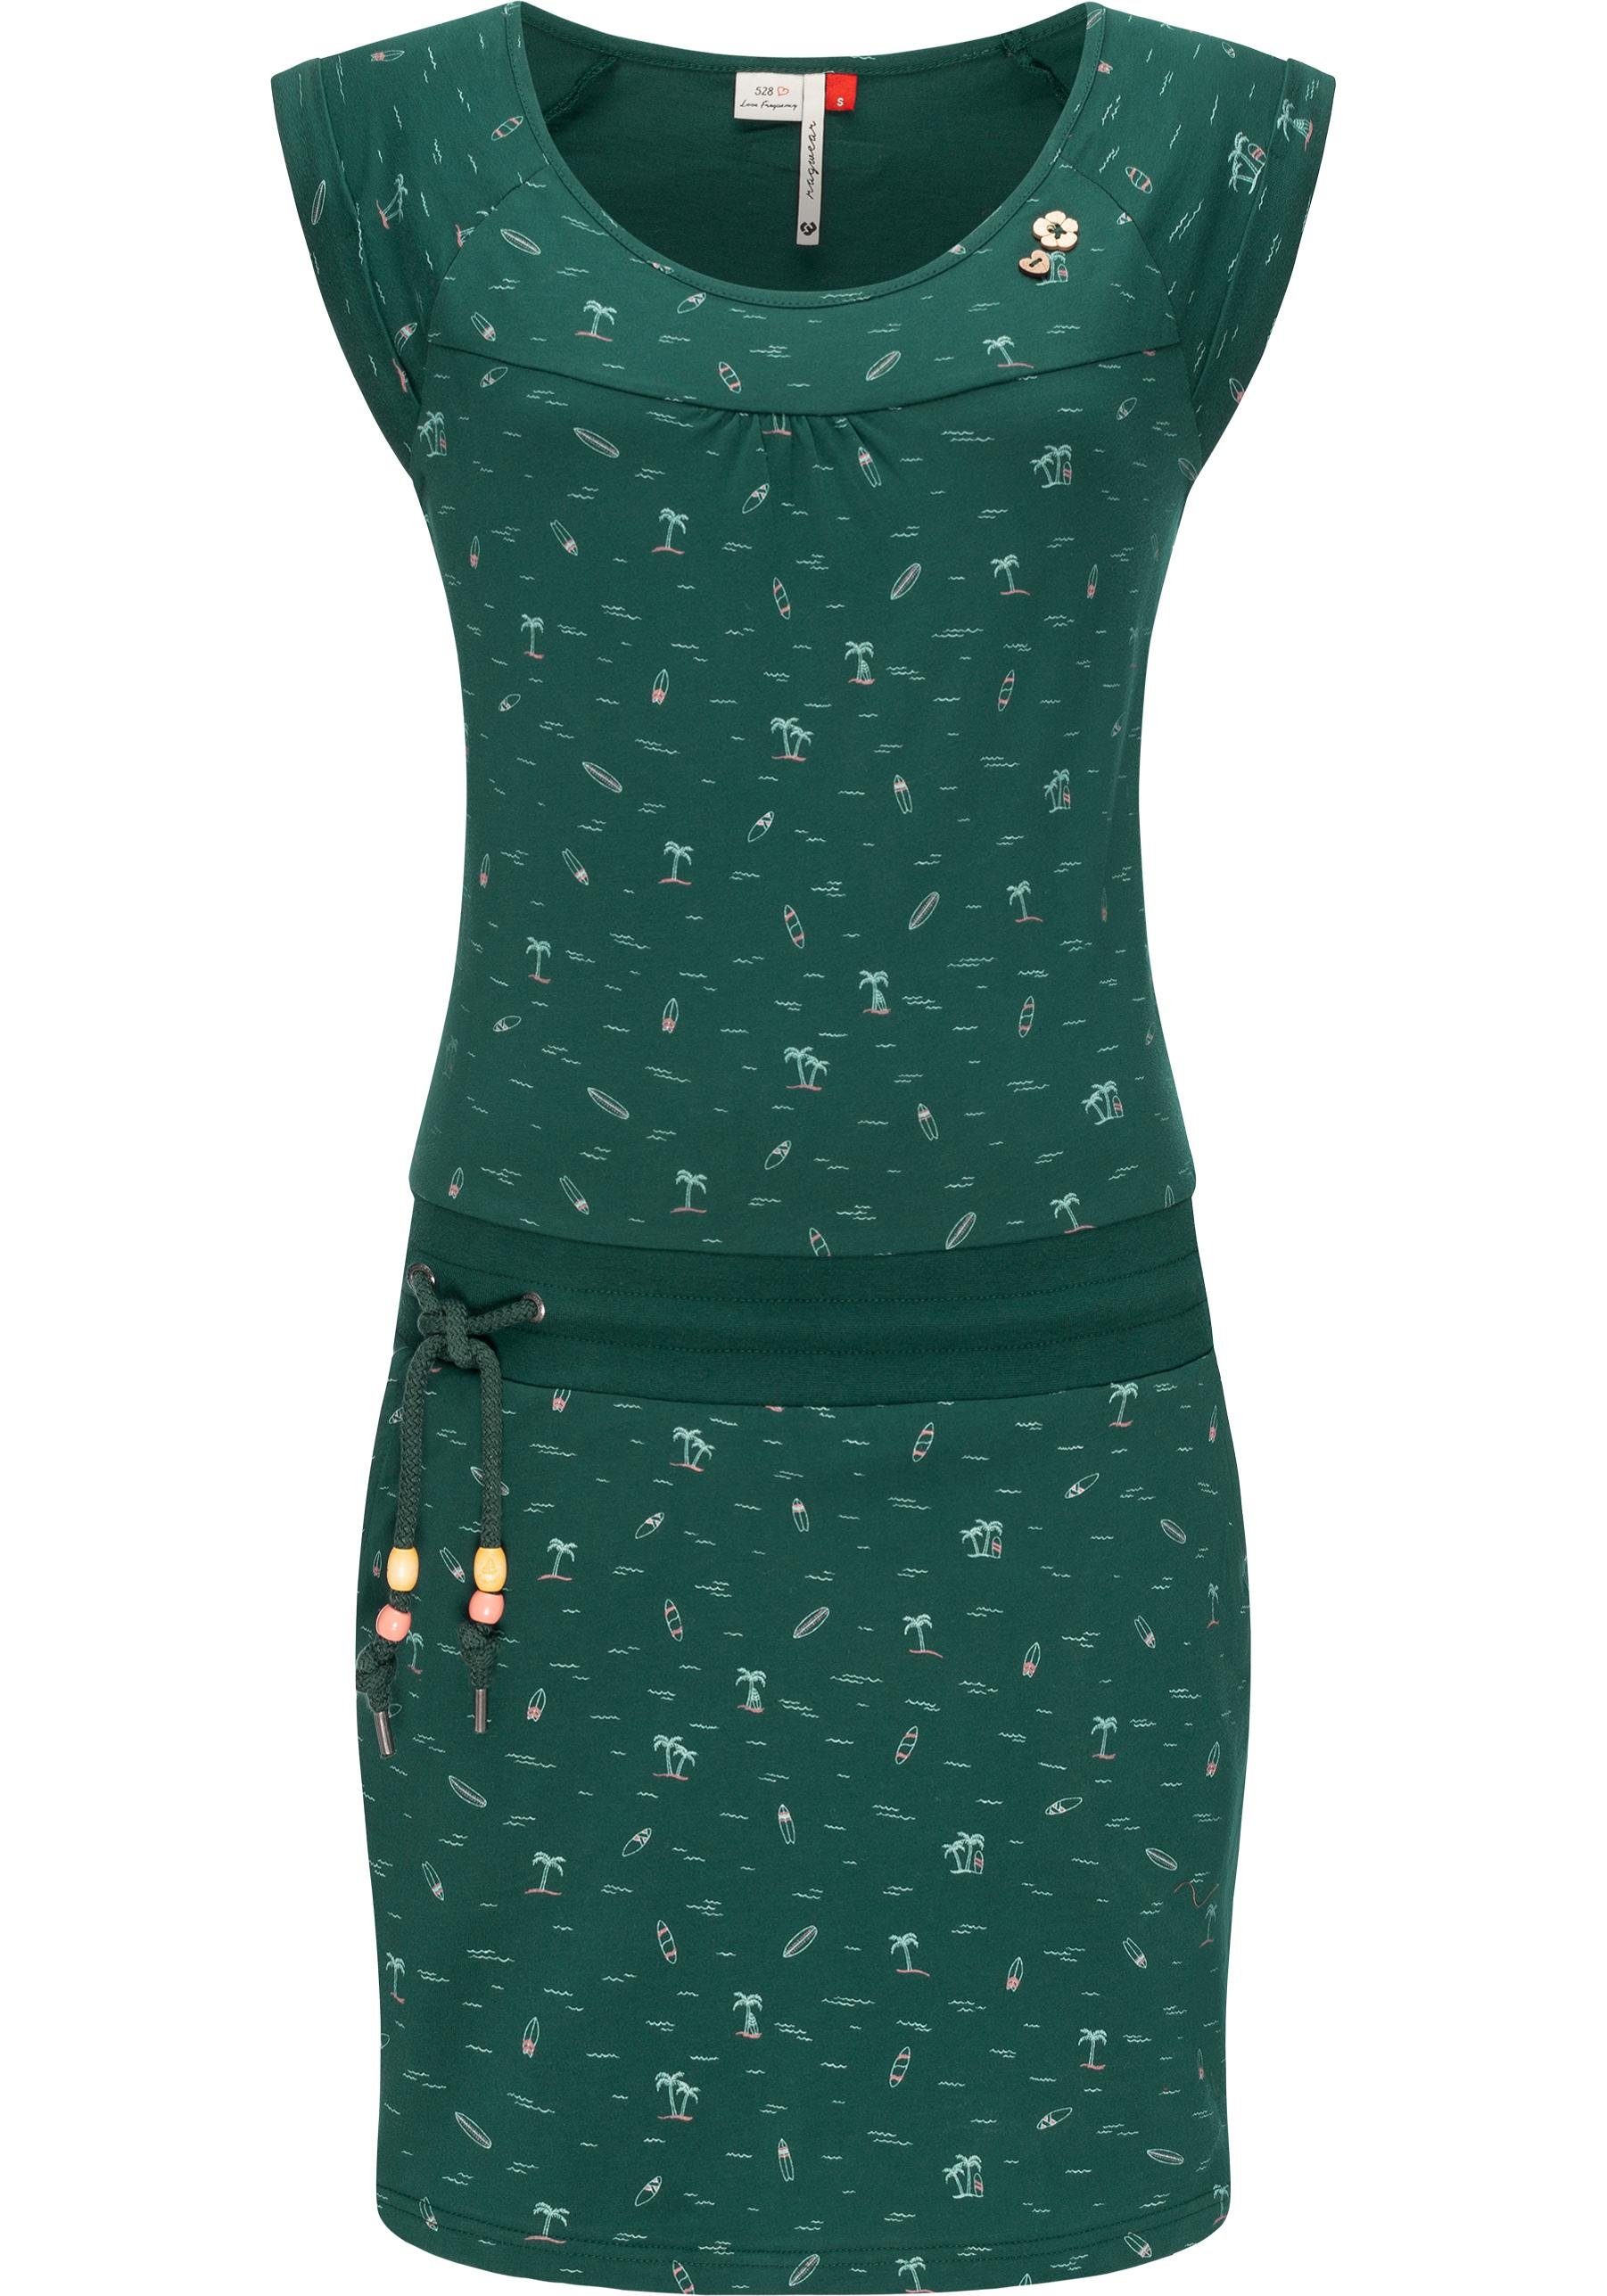 Ragwear Sommerkleid Penelope leichtes Baumwoll Kleid mit Print dunkelgrün